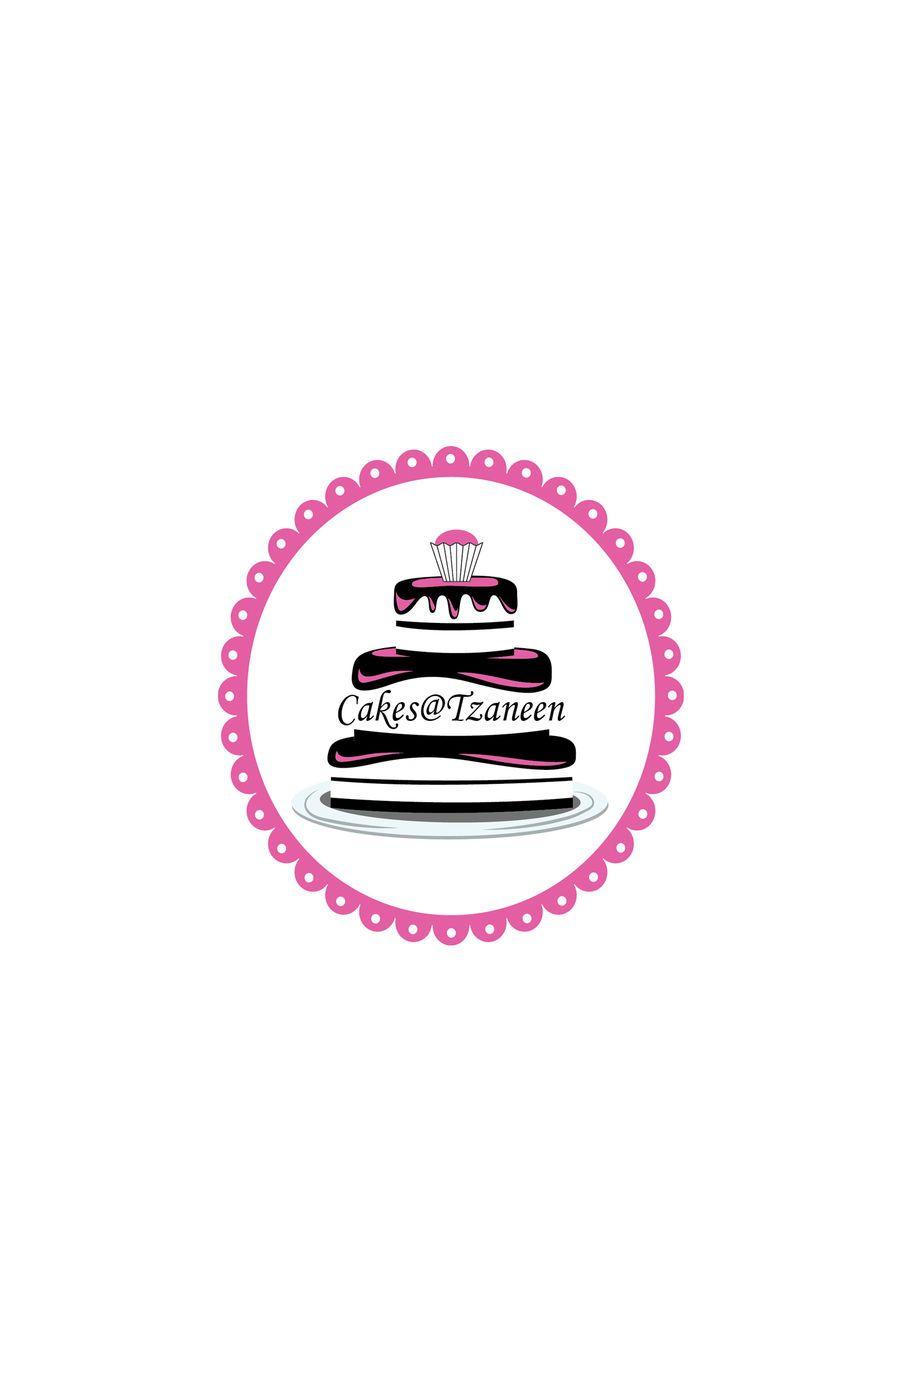 Cake Logo - Entry by Rajib1688 for Cake